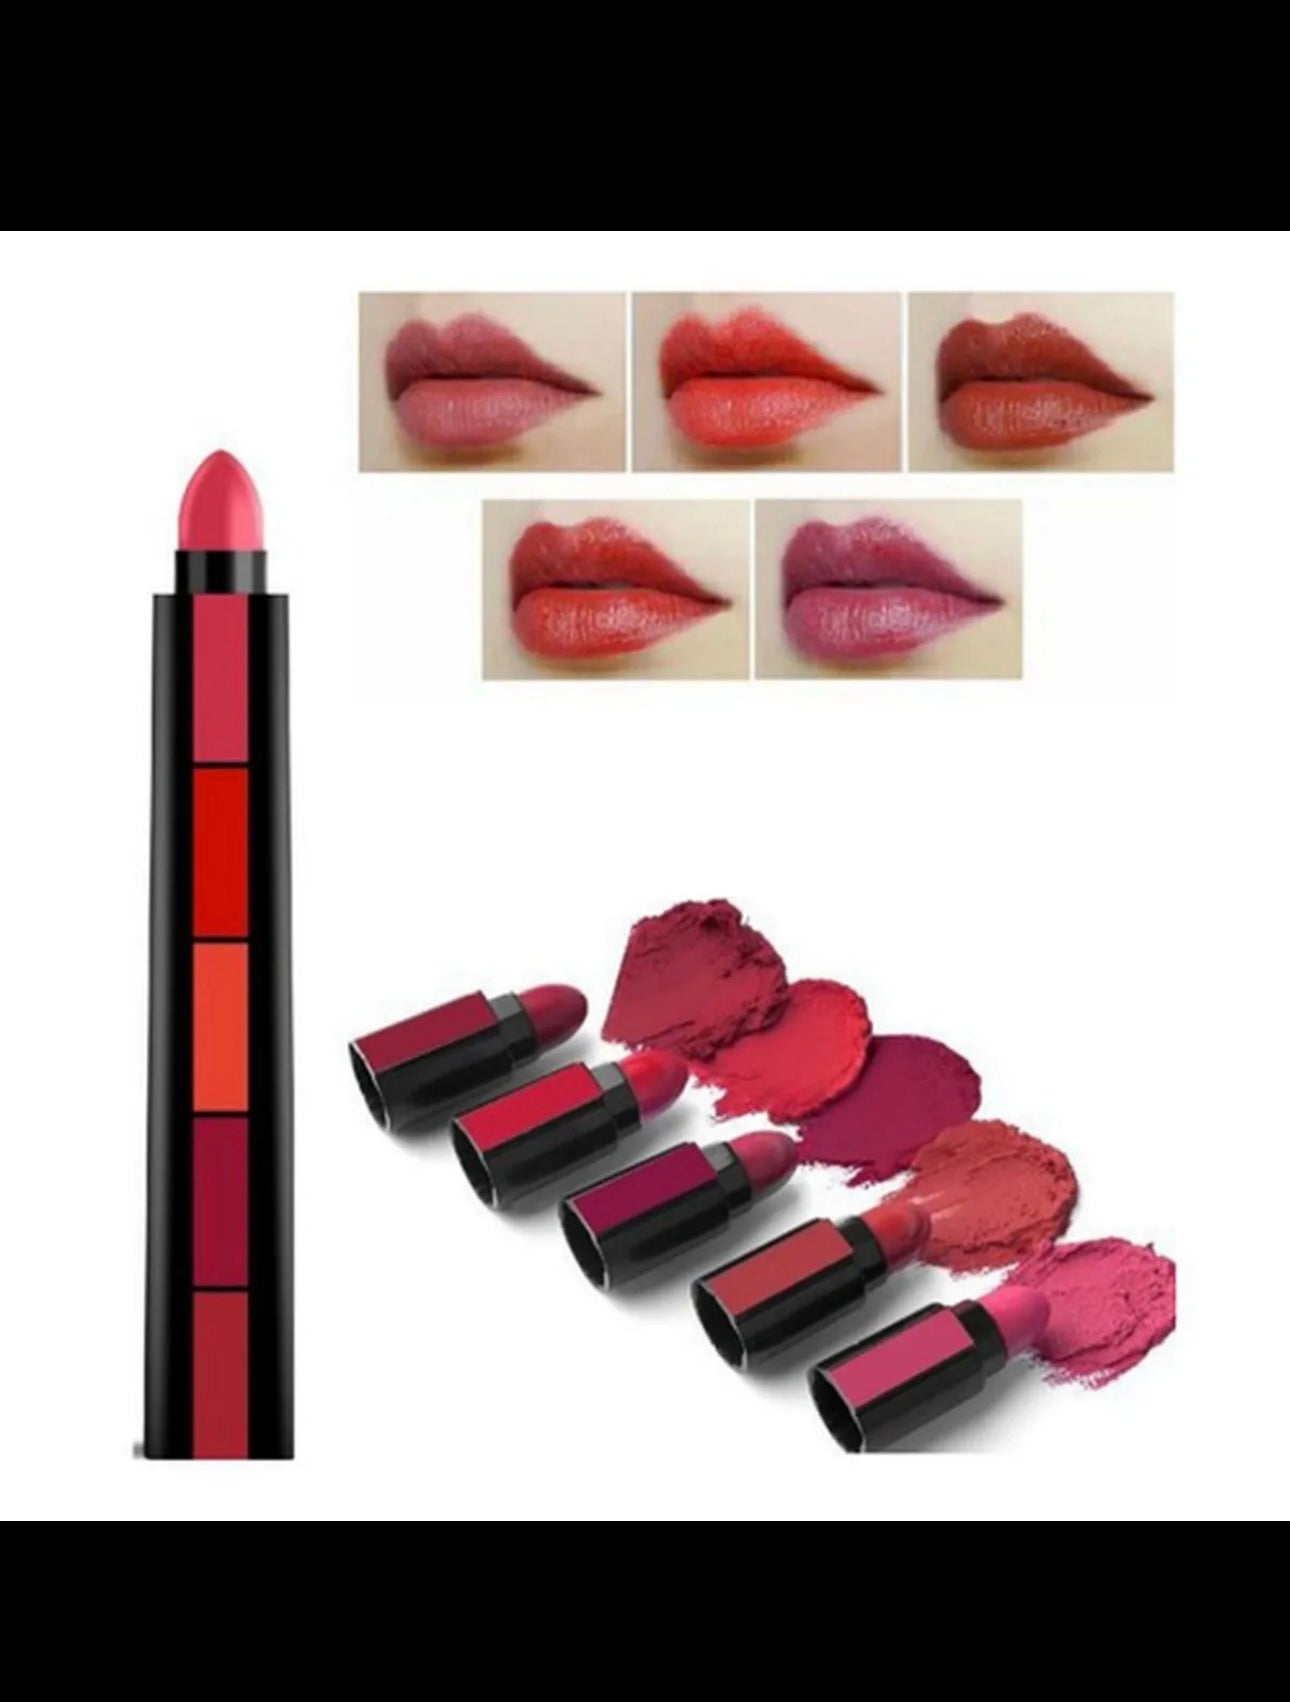 5 in 1 lipstick shades